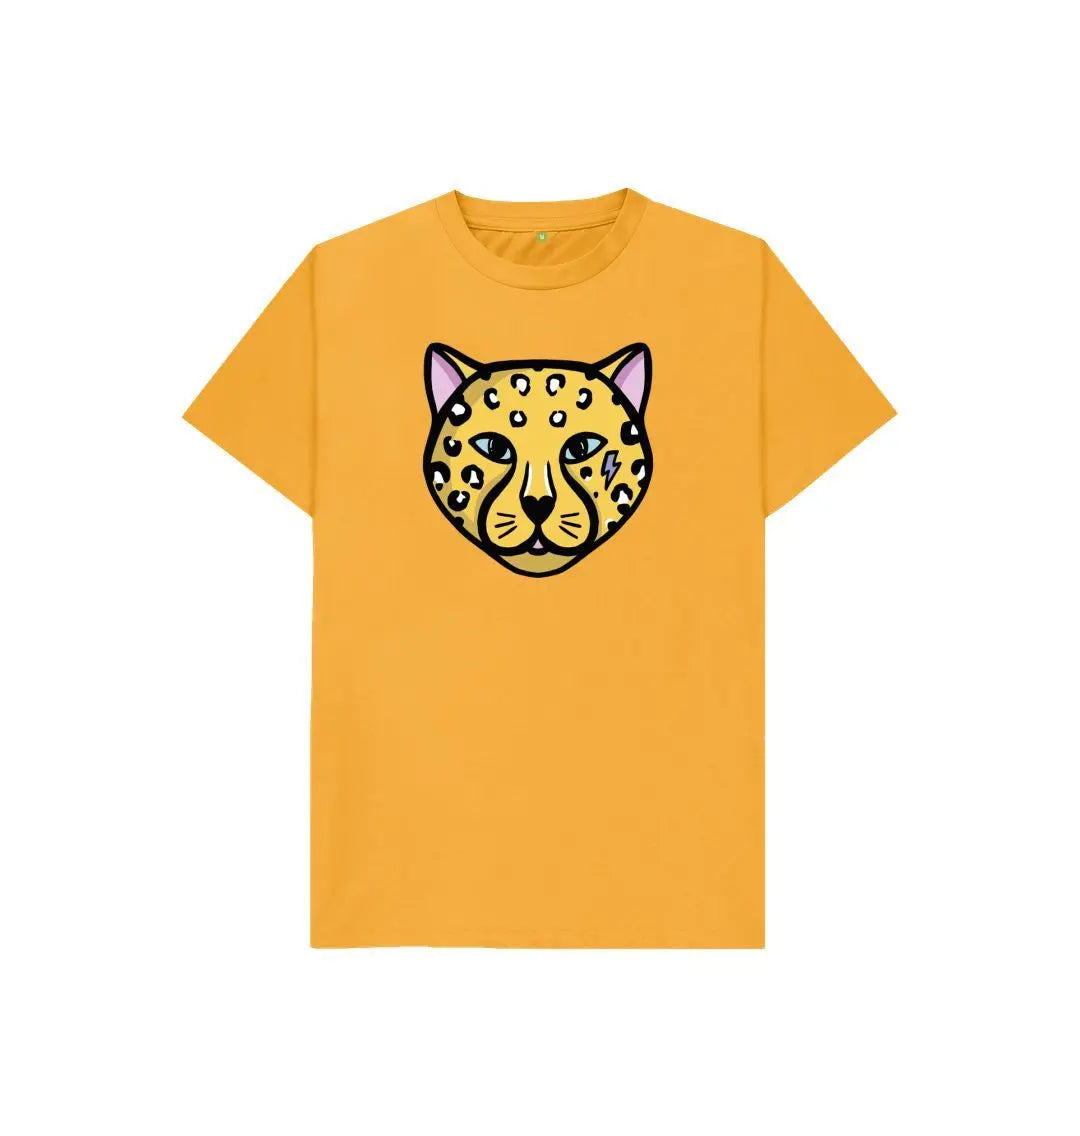 Kids Leopard face tshirt